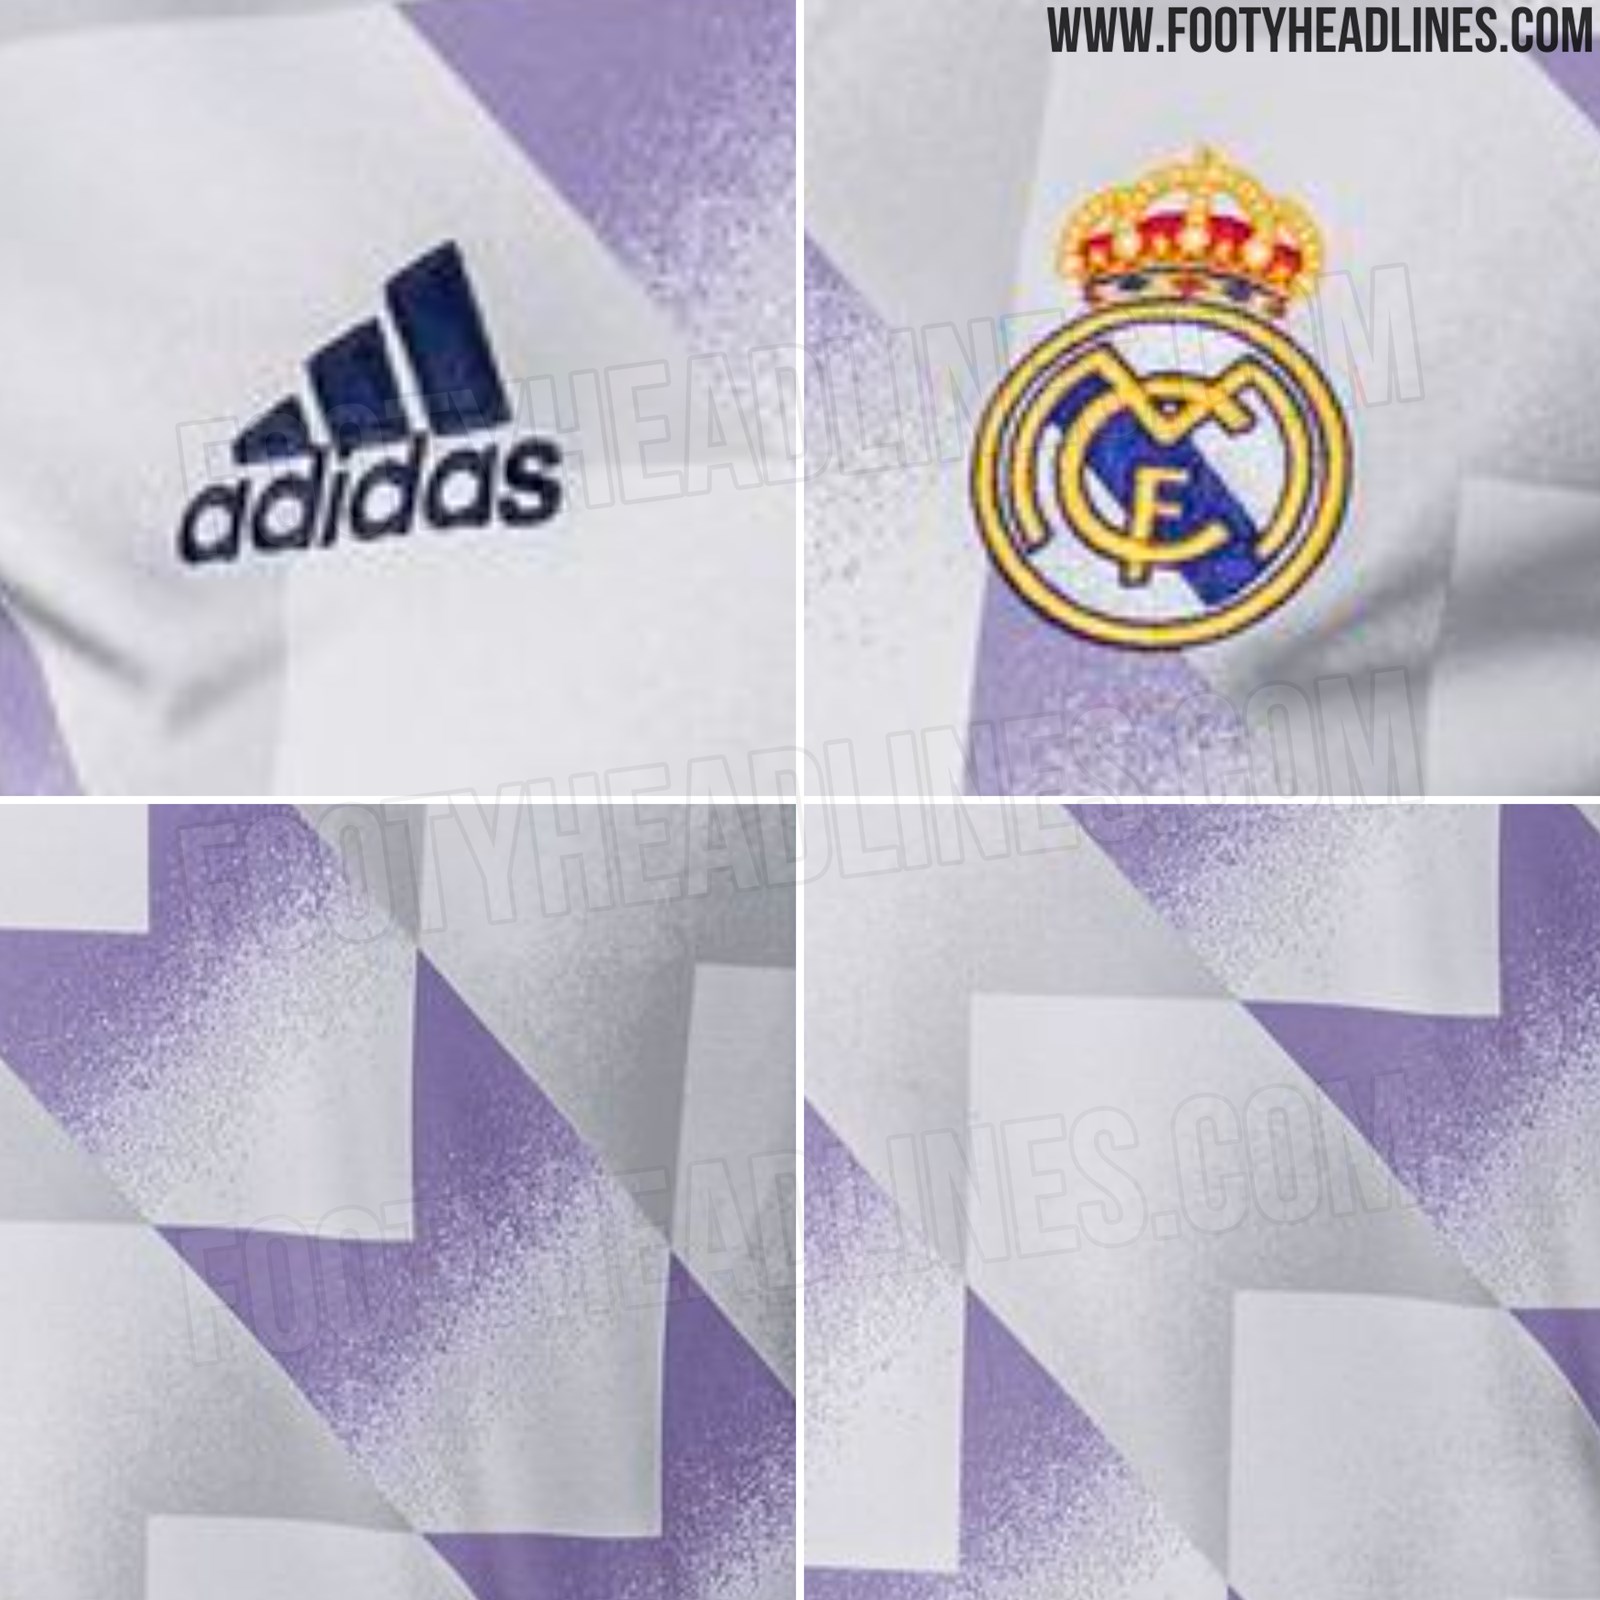 adidas Football Real Madrid printed pre-match t-shirt in black